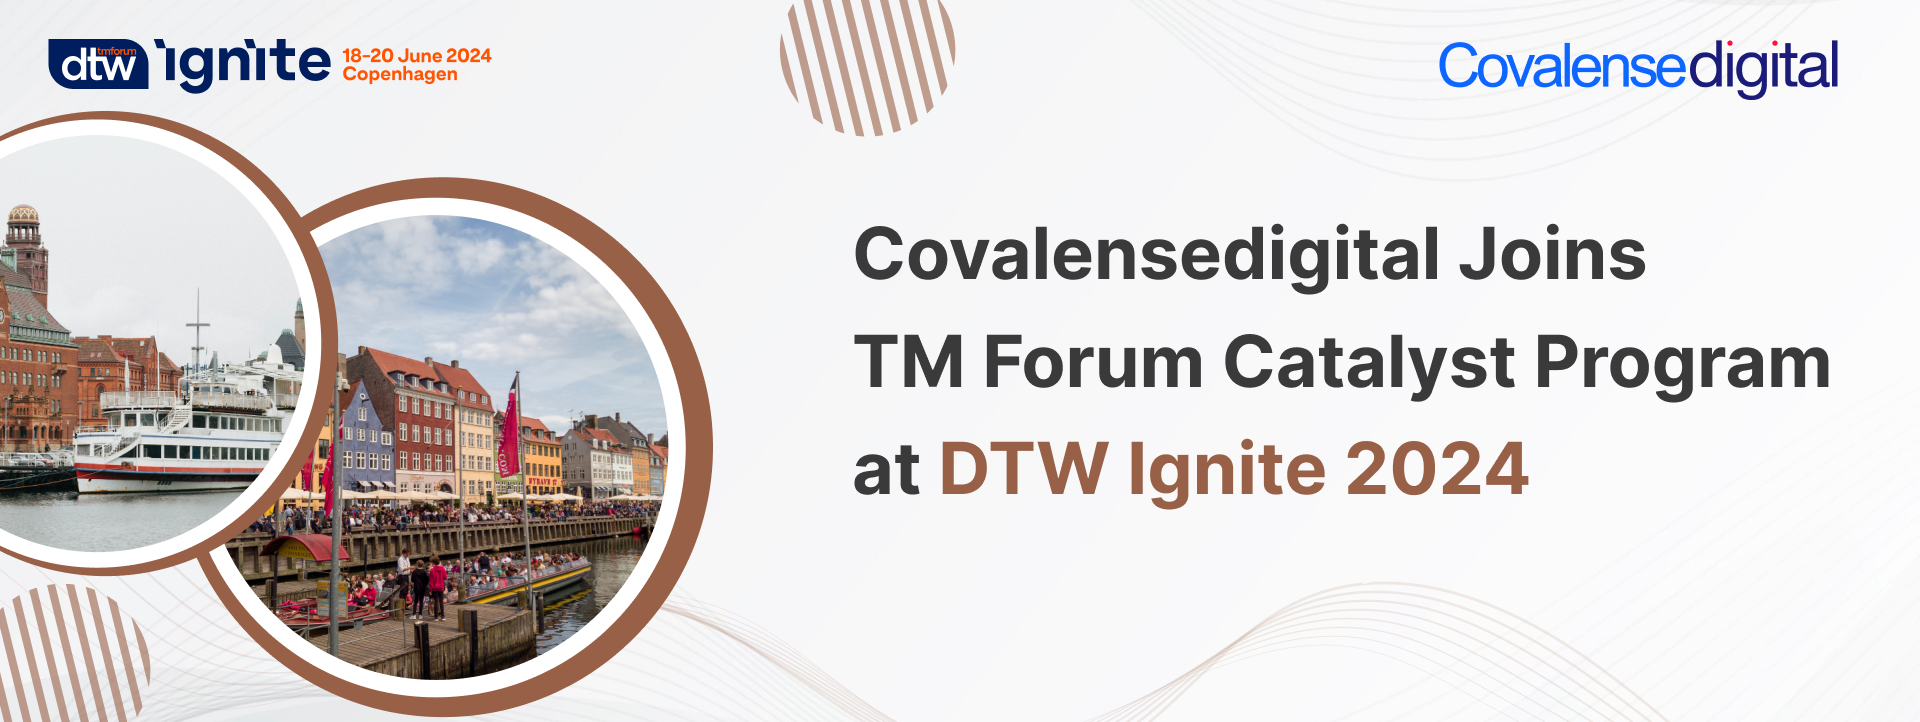 Covalensedigital Joins TM Forum Catalyst Program at DTW Ignite 2024